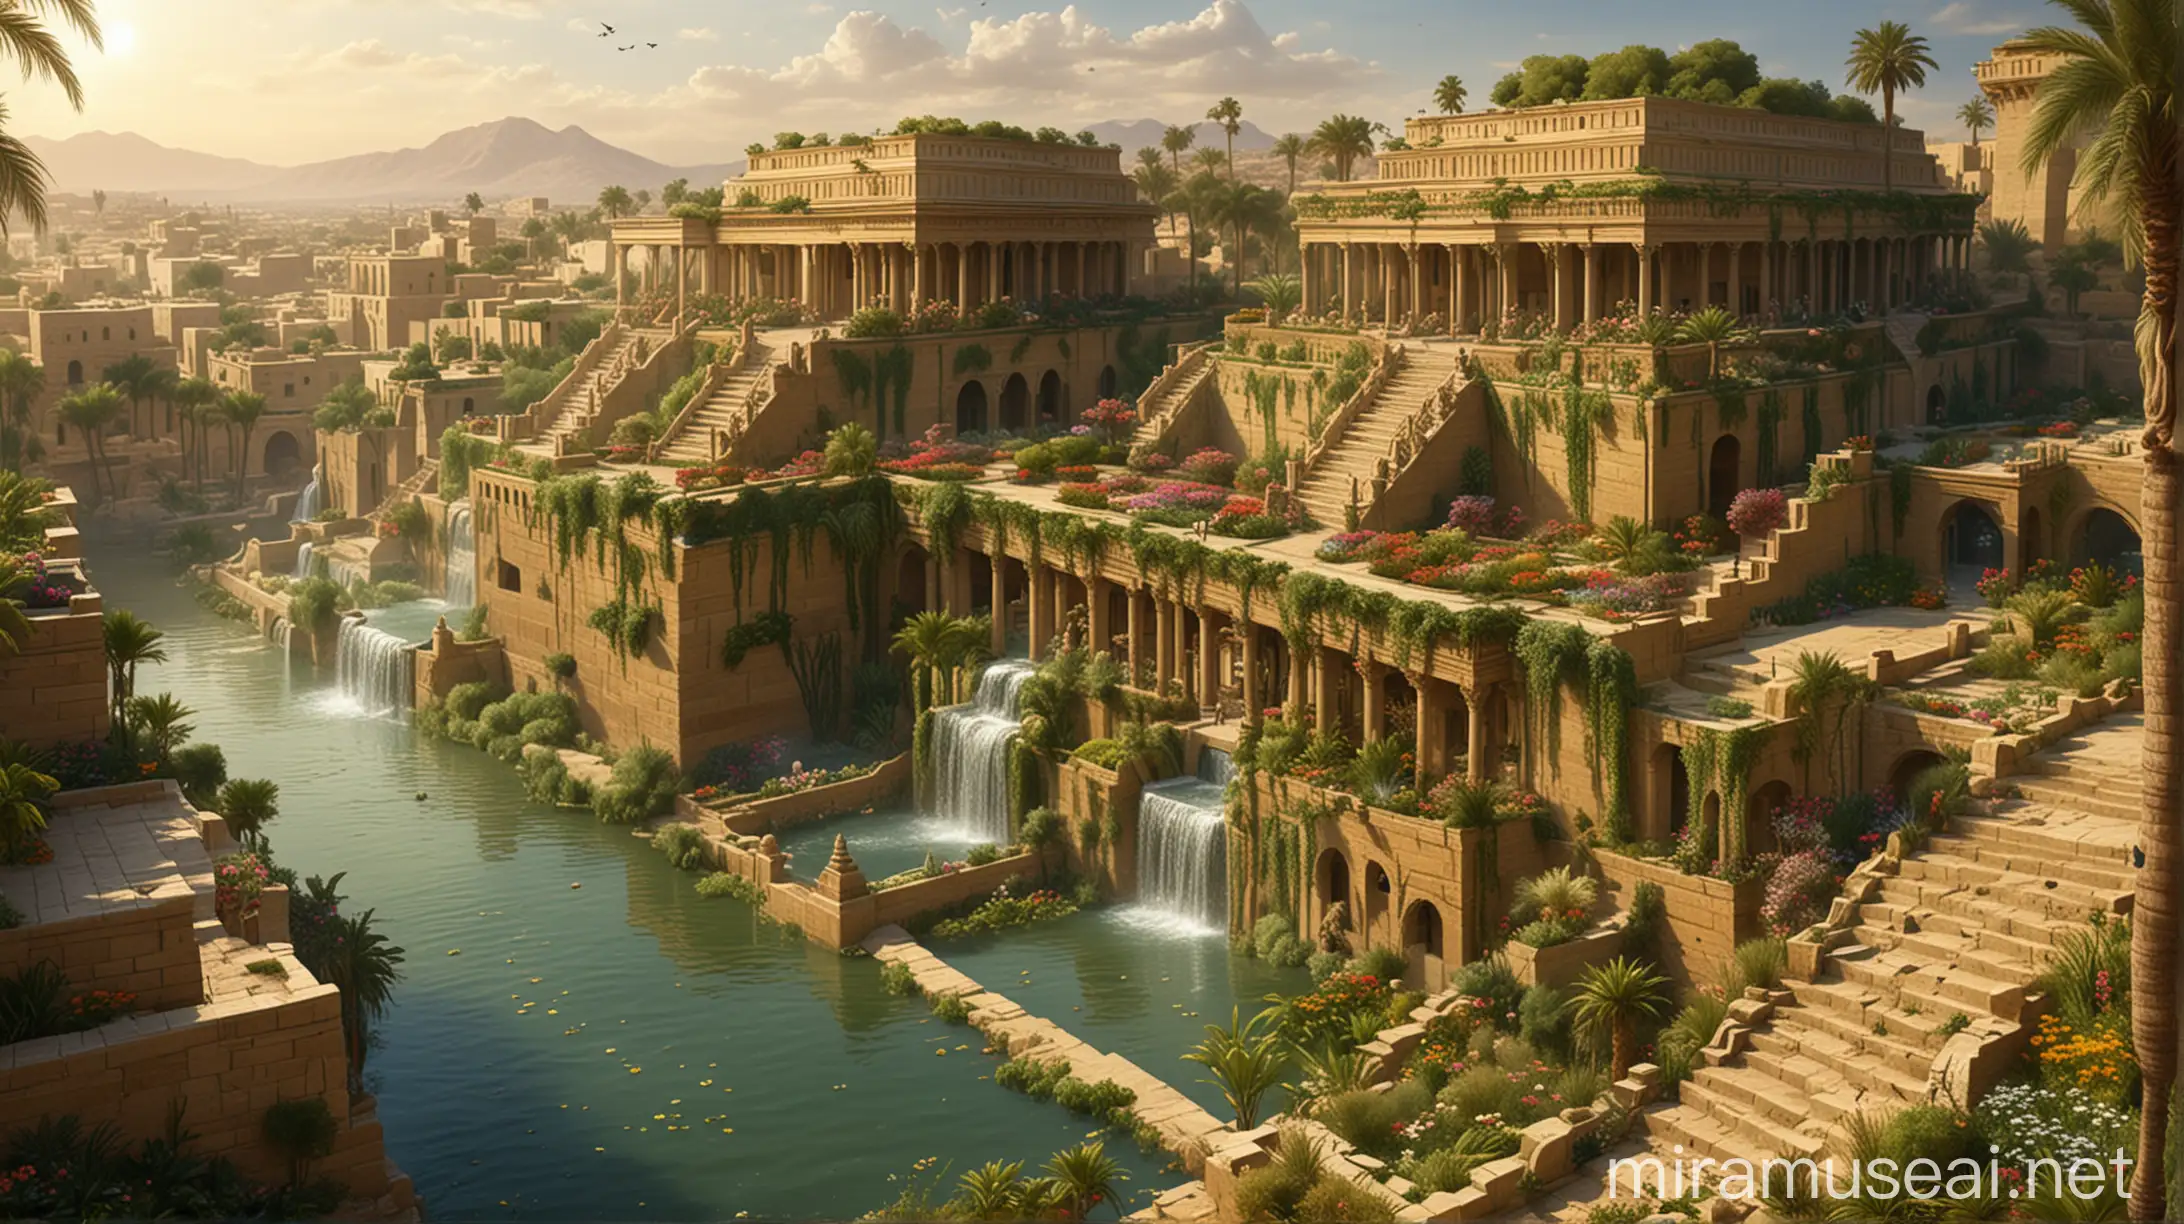 Hanging Gardens of Babylon Ancient Wonder Amidst Vibrant Flora and Mesopotamian Majesty